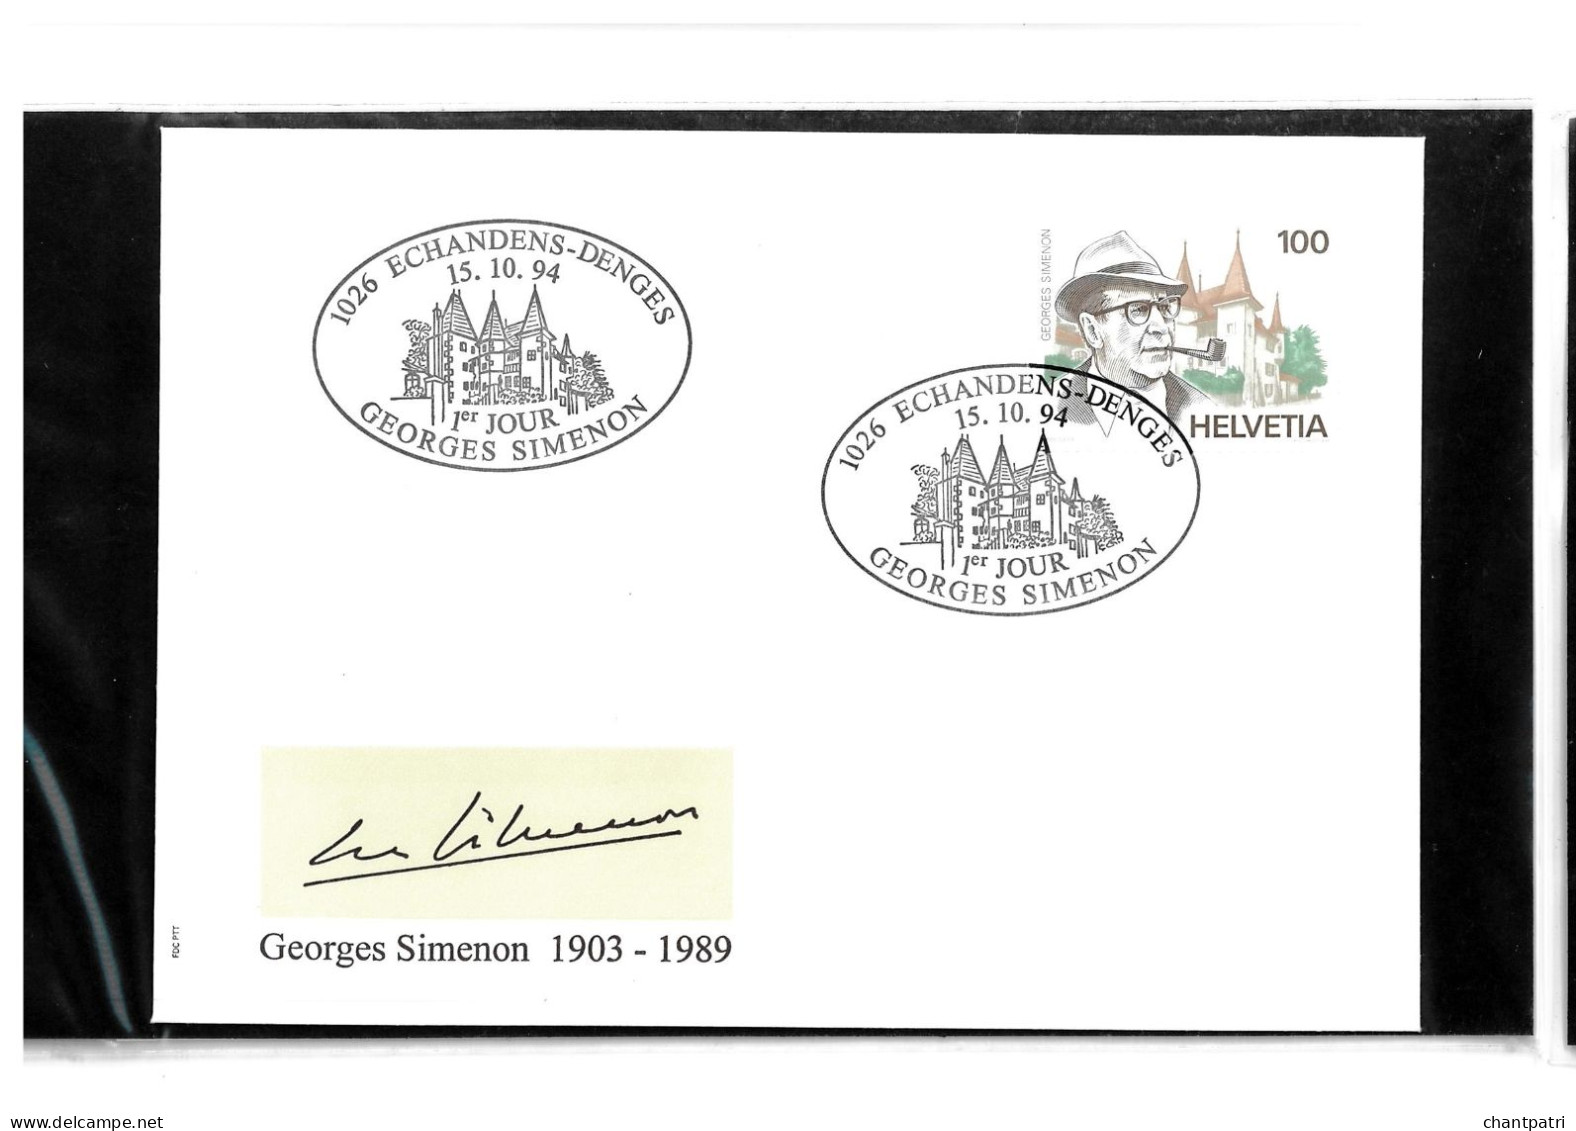 1026 Echandens Denges - 1er Jour Georges Simenon - 15 10 1994 - Beli FDC 117 - Briefe U. Dokumente